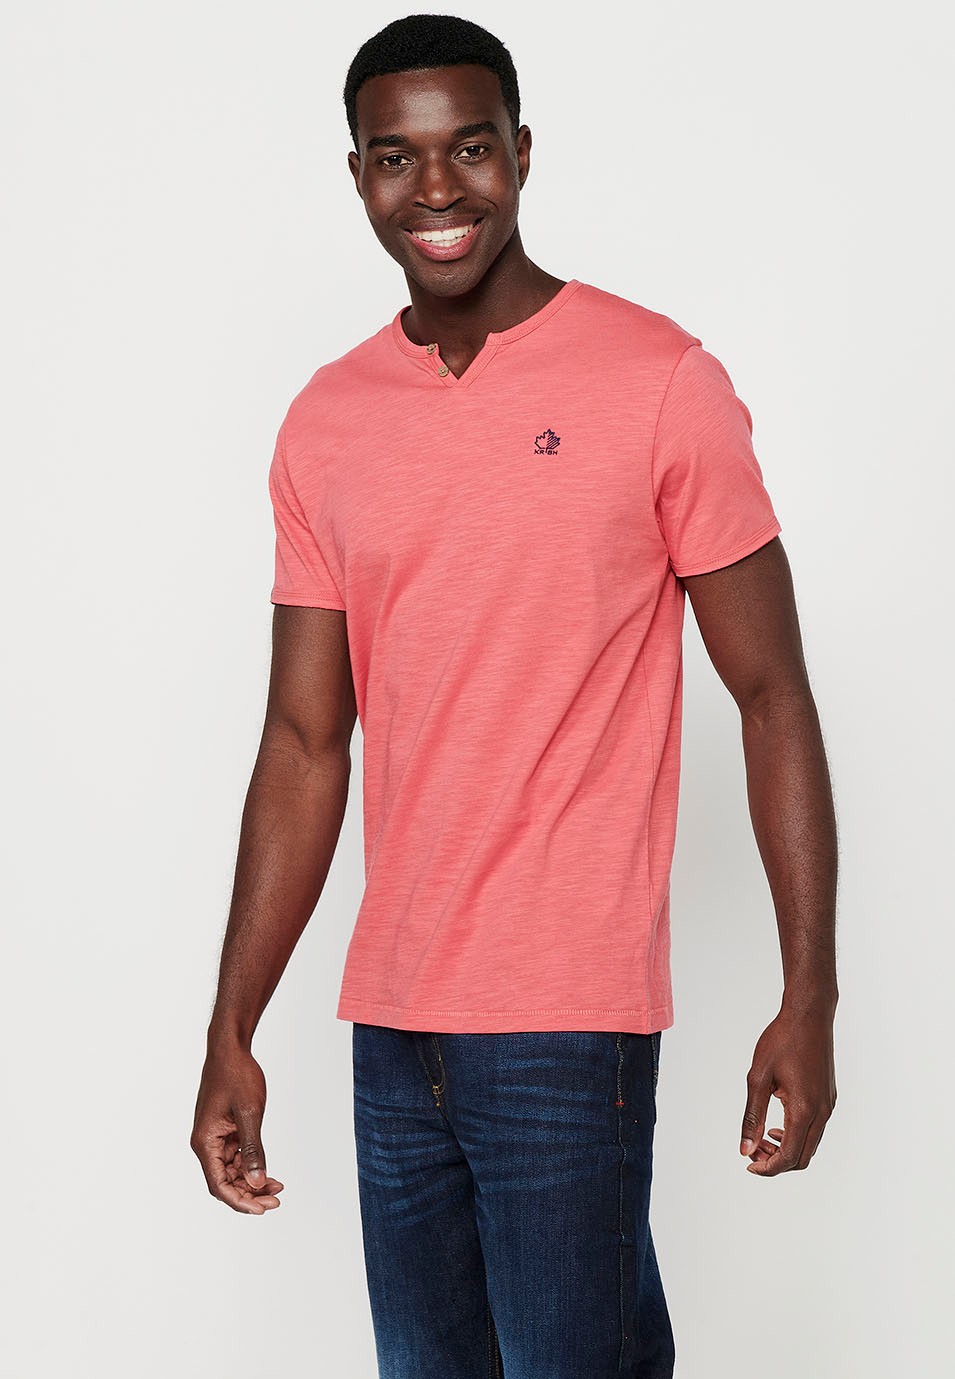 Camiseta básica de manga corta de algodón, cuello V con boton, color rosa para hombre